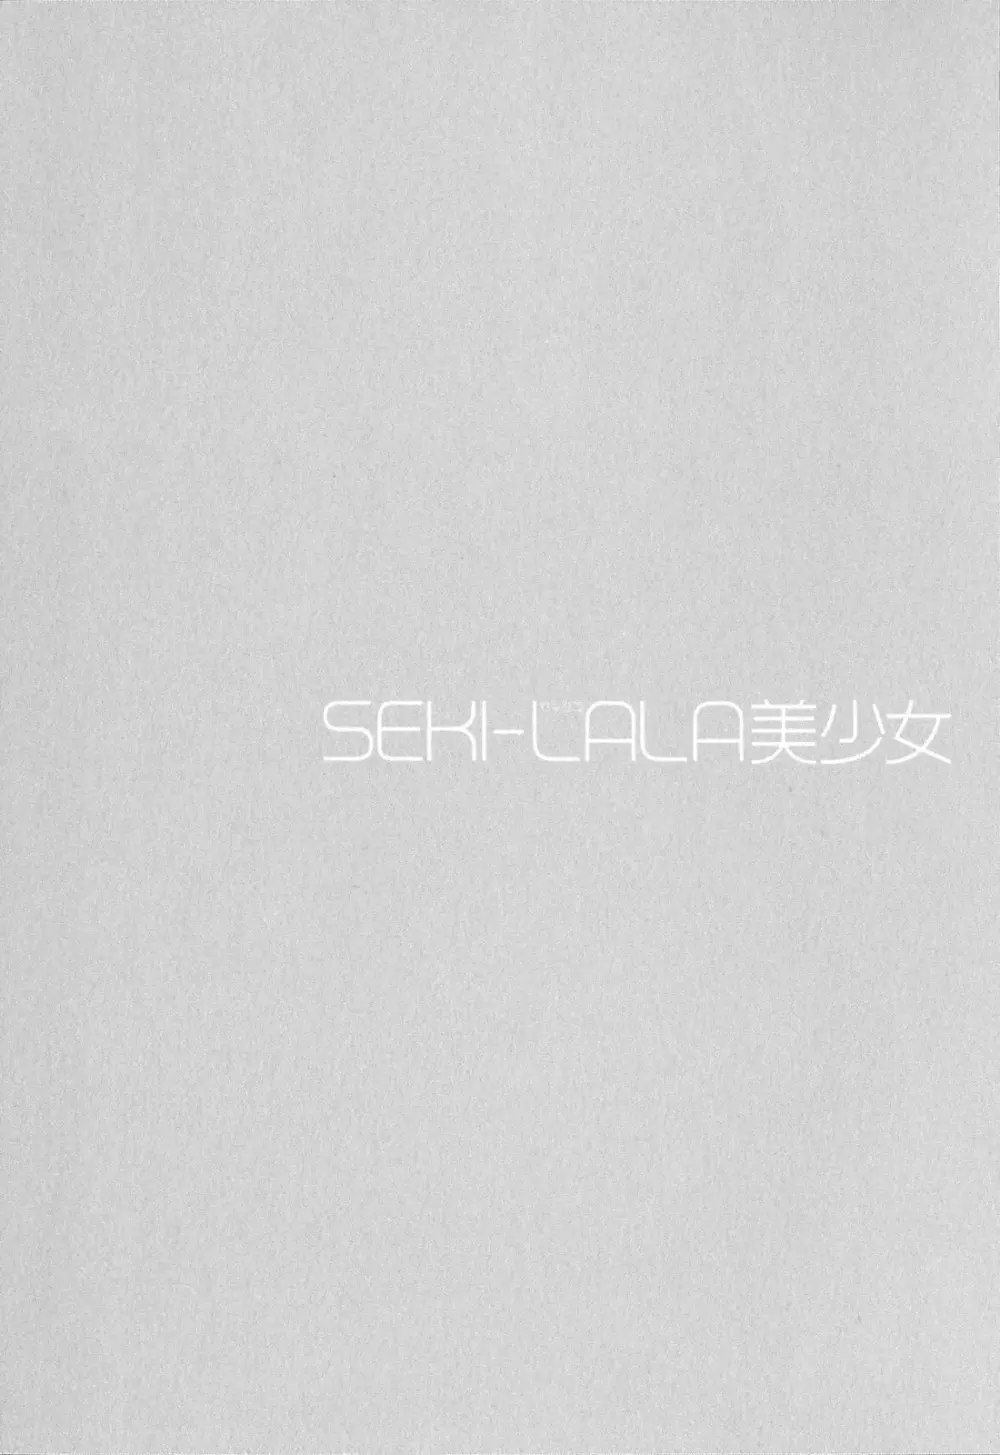 SEKI-LALA美少女 73ページ